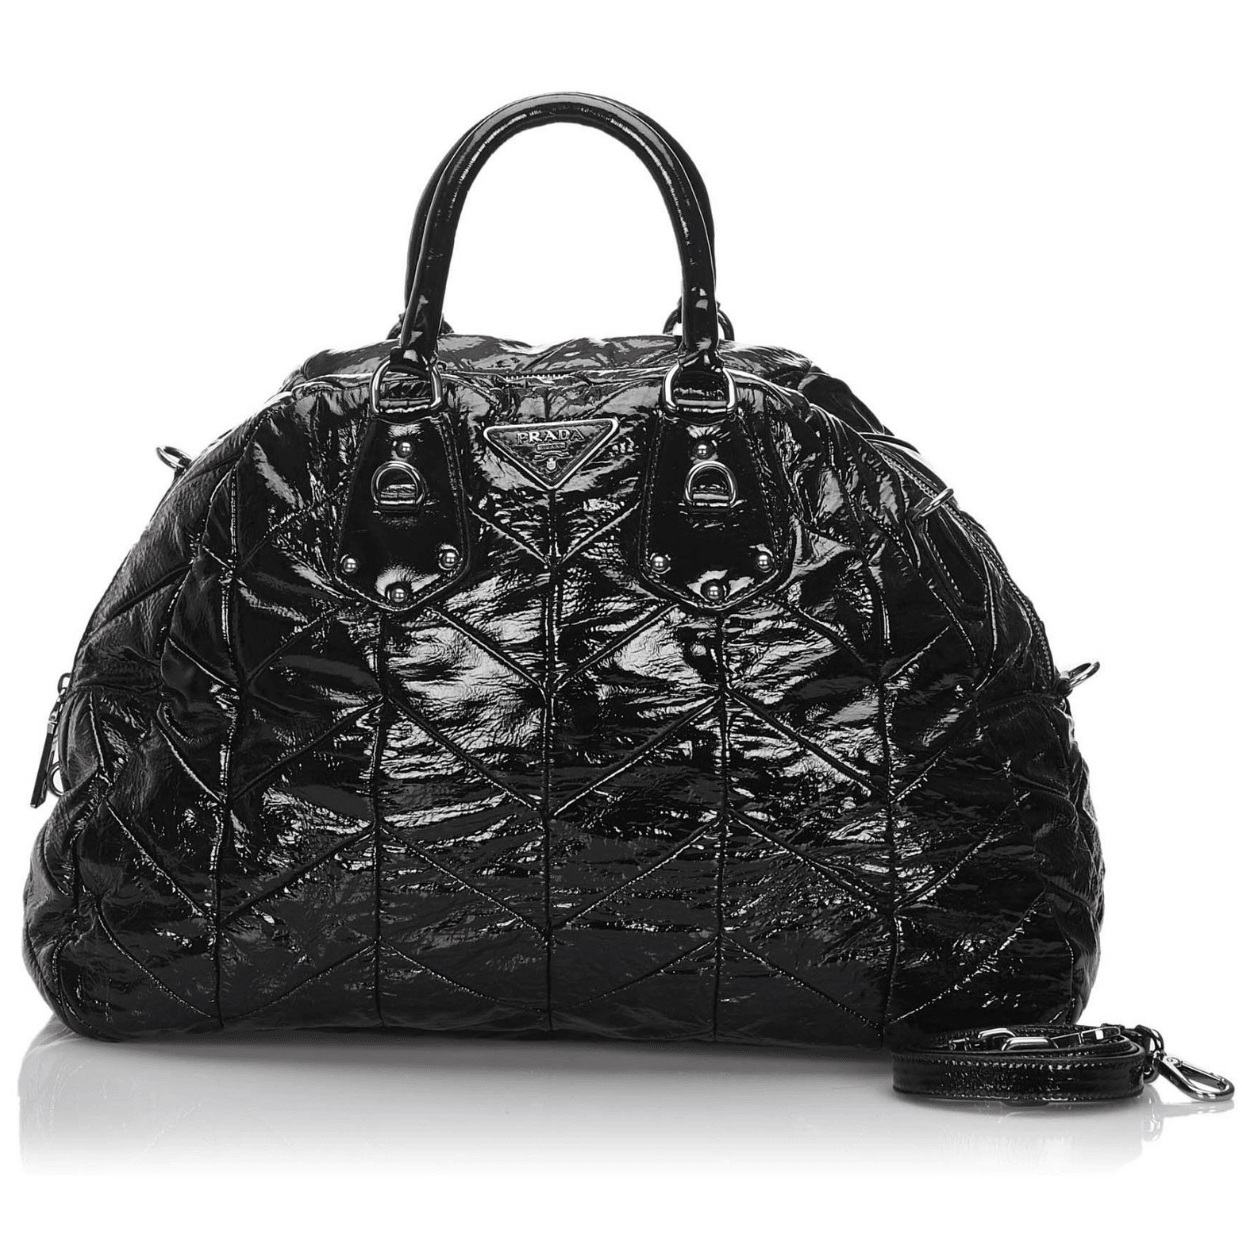 Black Patent Quilted Vernice Handbag - Endless